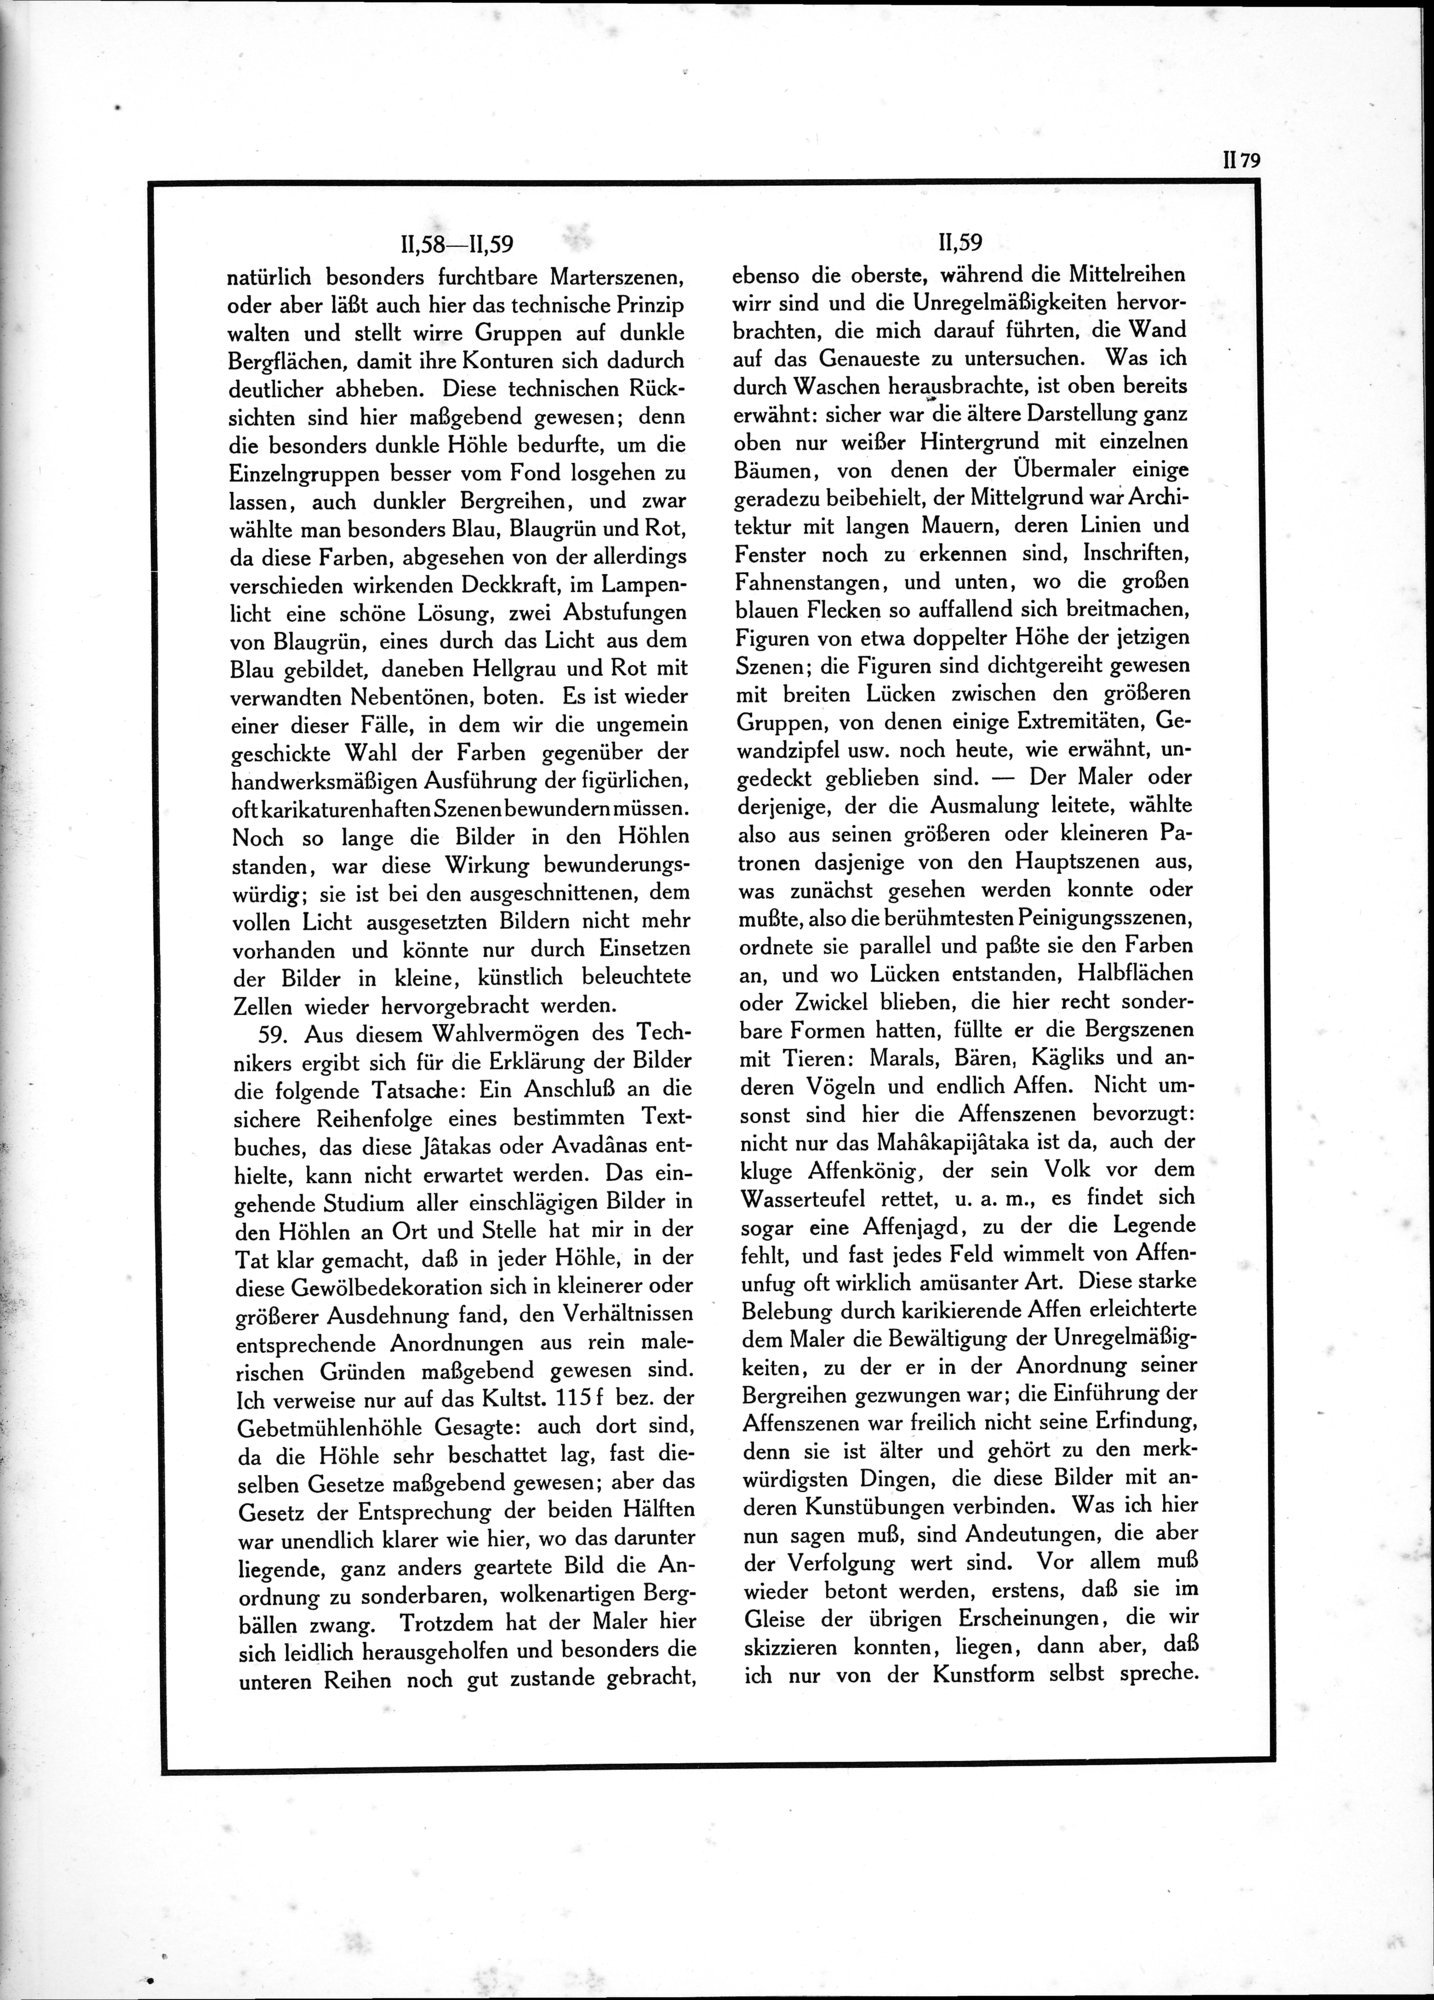 Alt-Kutscha : vol.1 / Page 193 (Grayscale High Resolution Image)